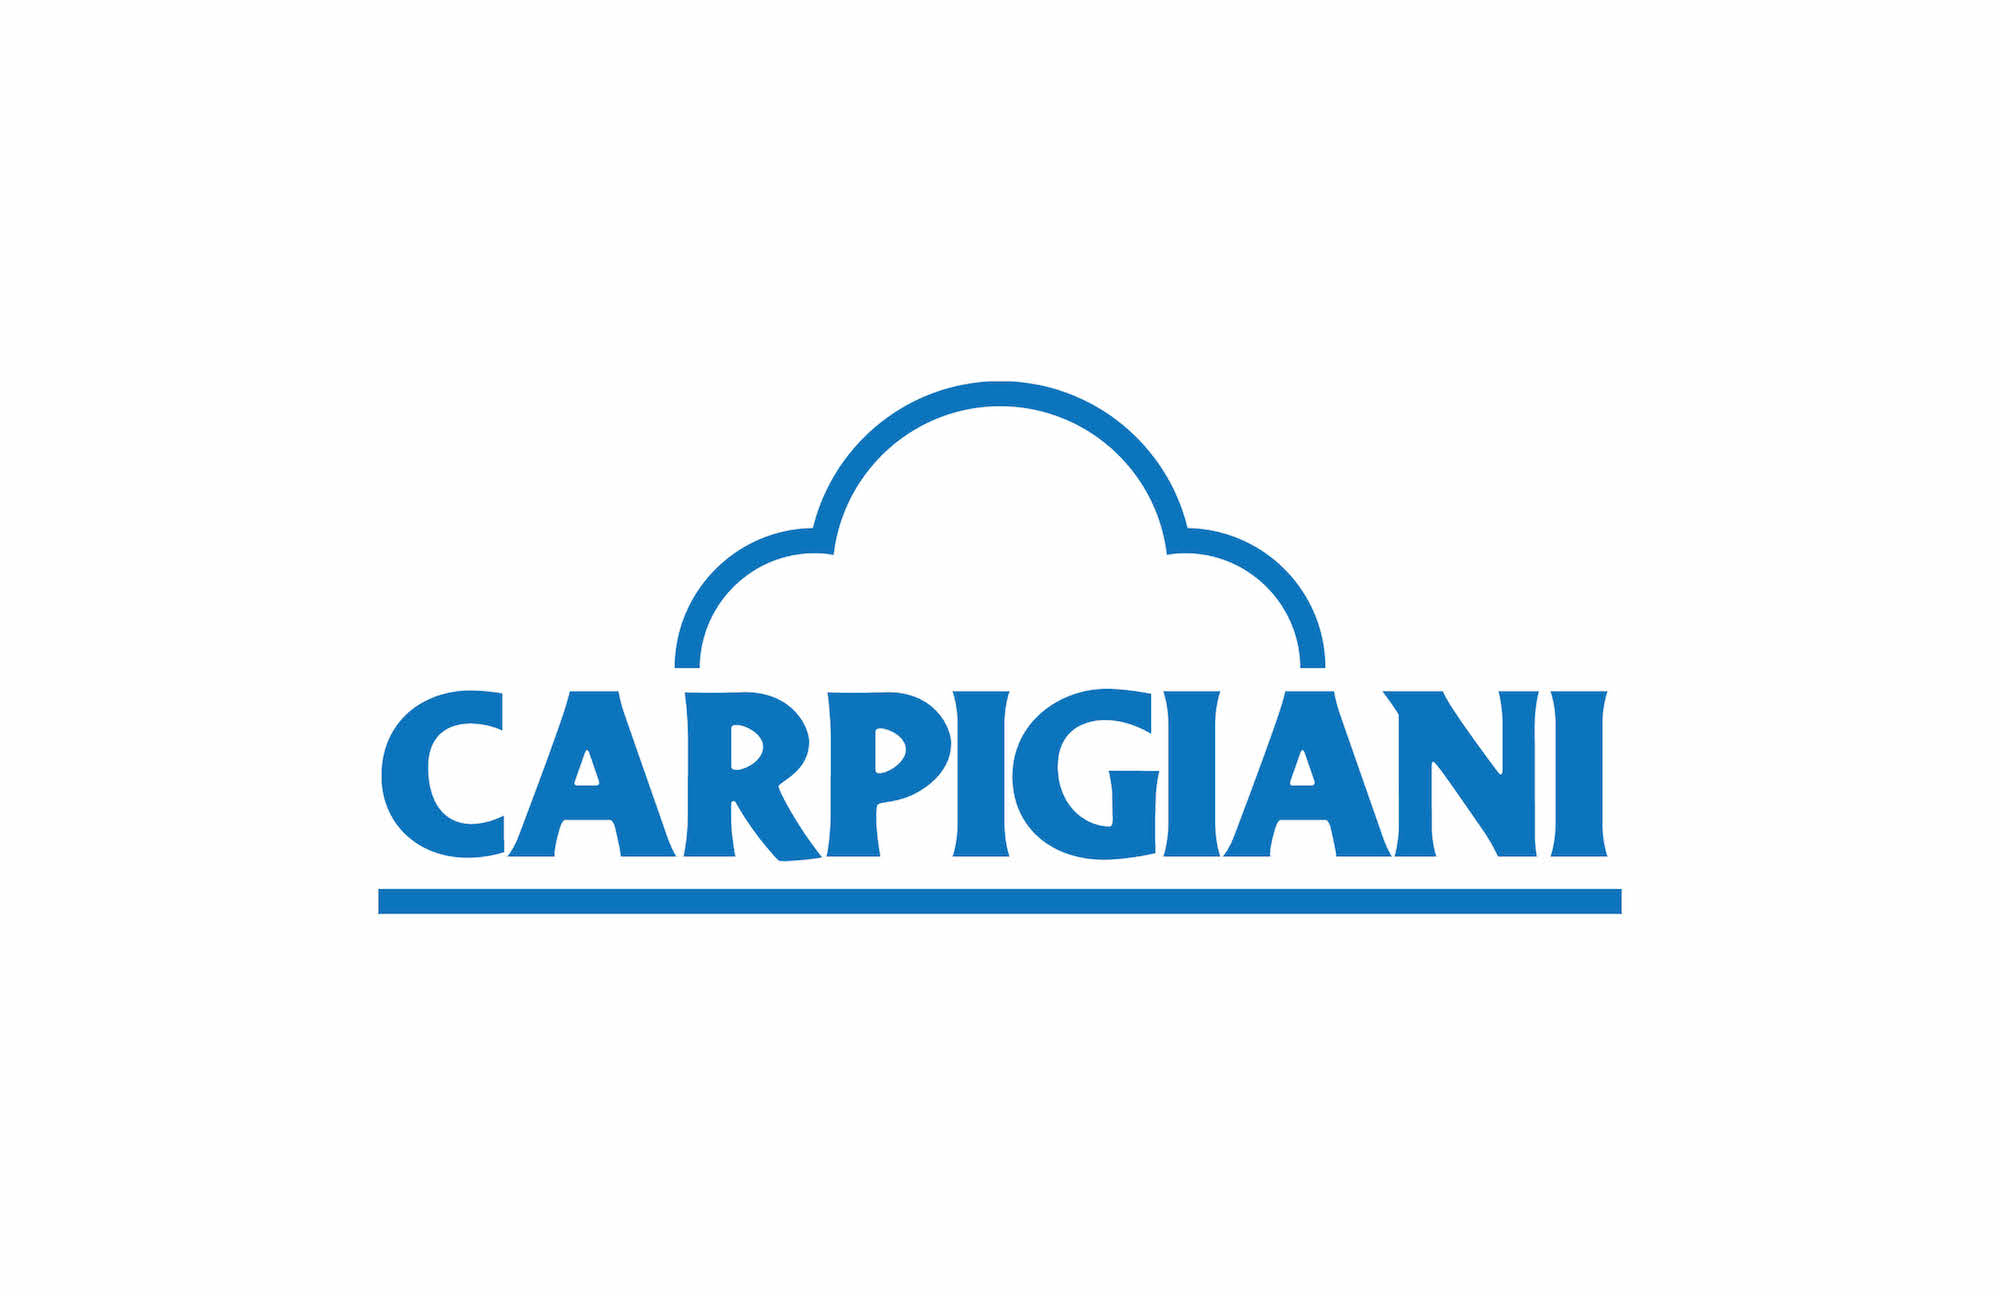 CarpigianiLogo-afsystem.jpg